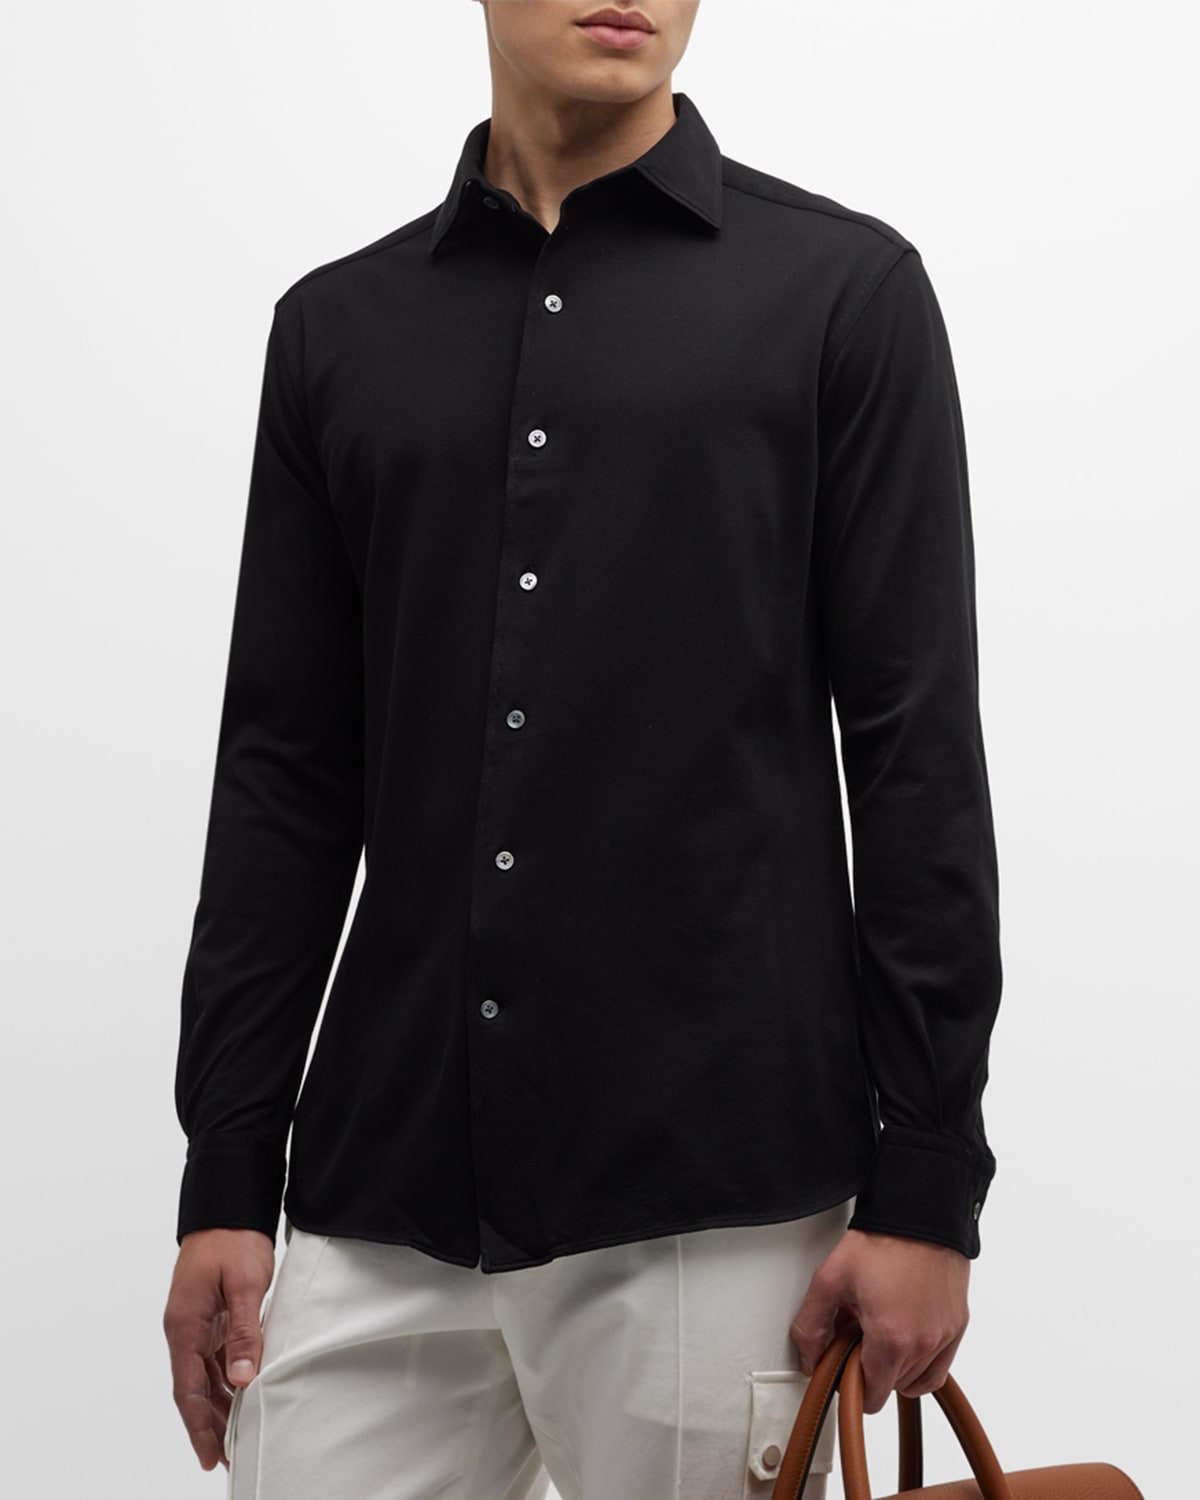 Zegna Men's Cashmere Jersey Sport Shirt In Black Solid